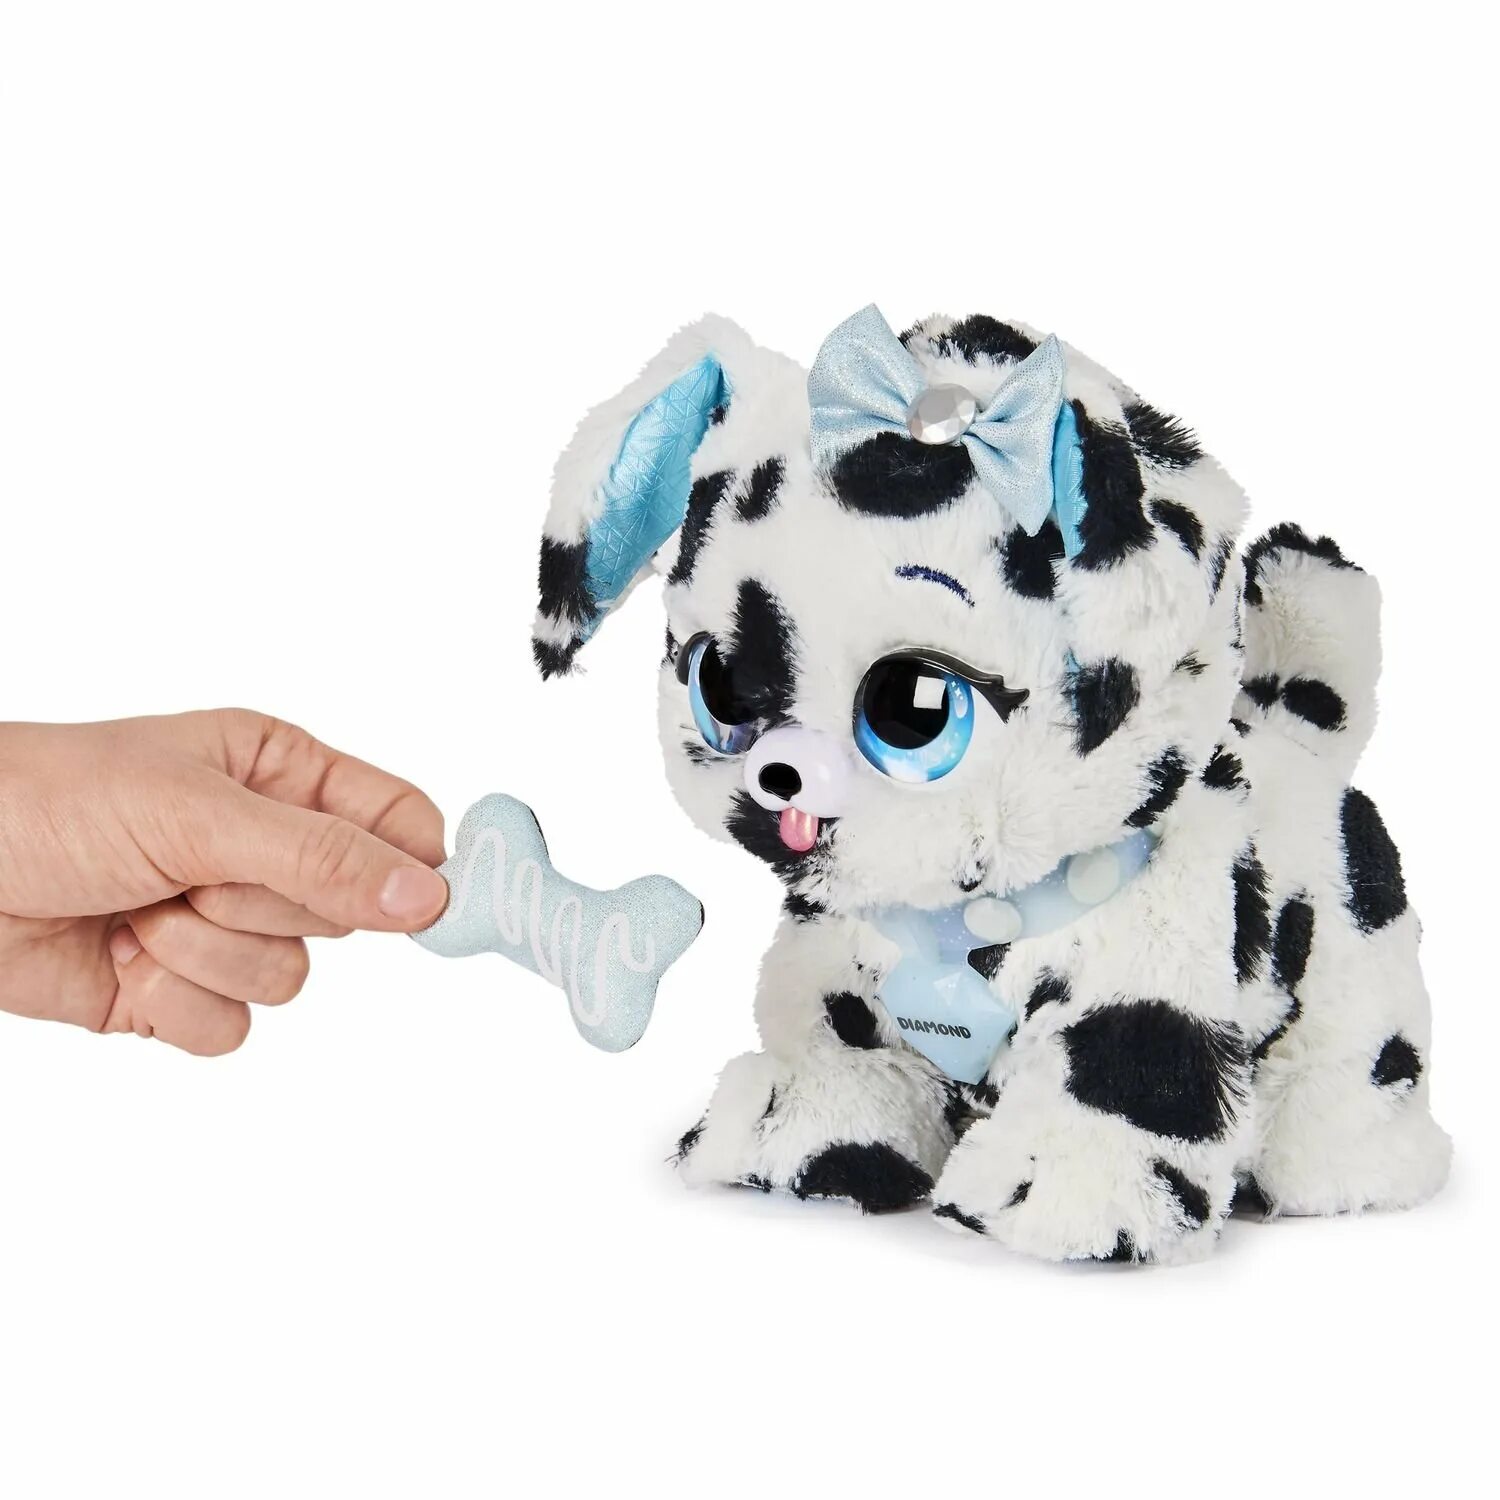 Diamond pet. Present Pets щенок далматинец. Интерактивная собака презент петс. Spin Master present Pets 6061363 интерактивная игрушка щенок-сюрприз "принцесса". Интерактивный щенок далматинец Ронни.